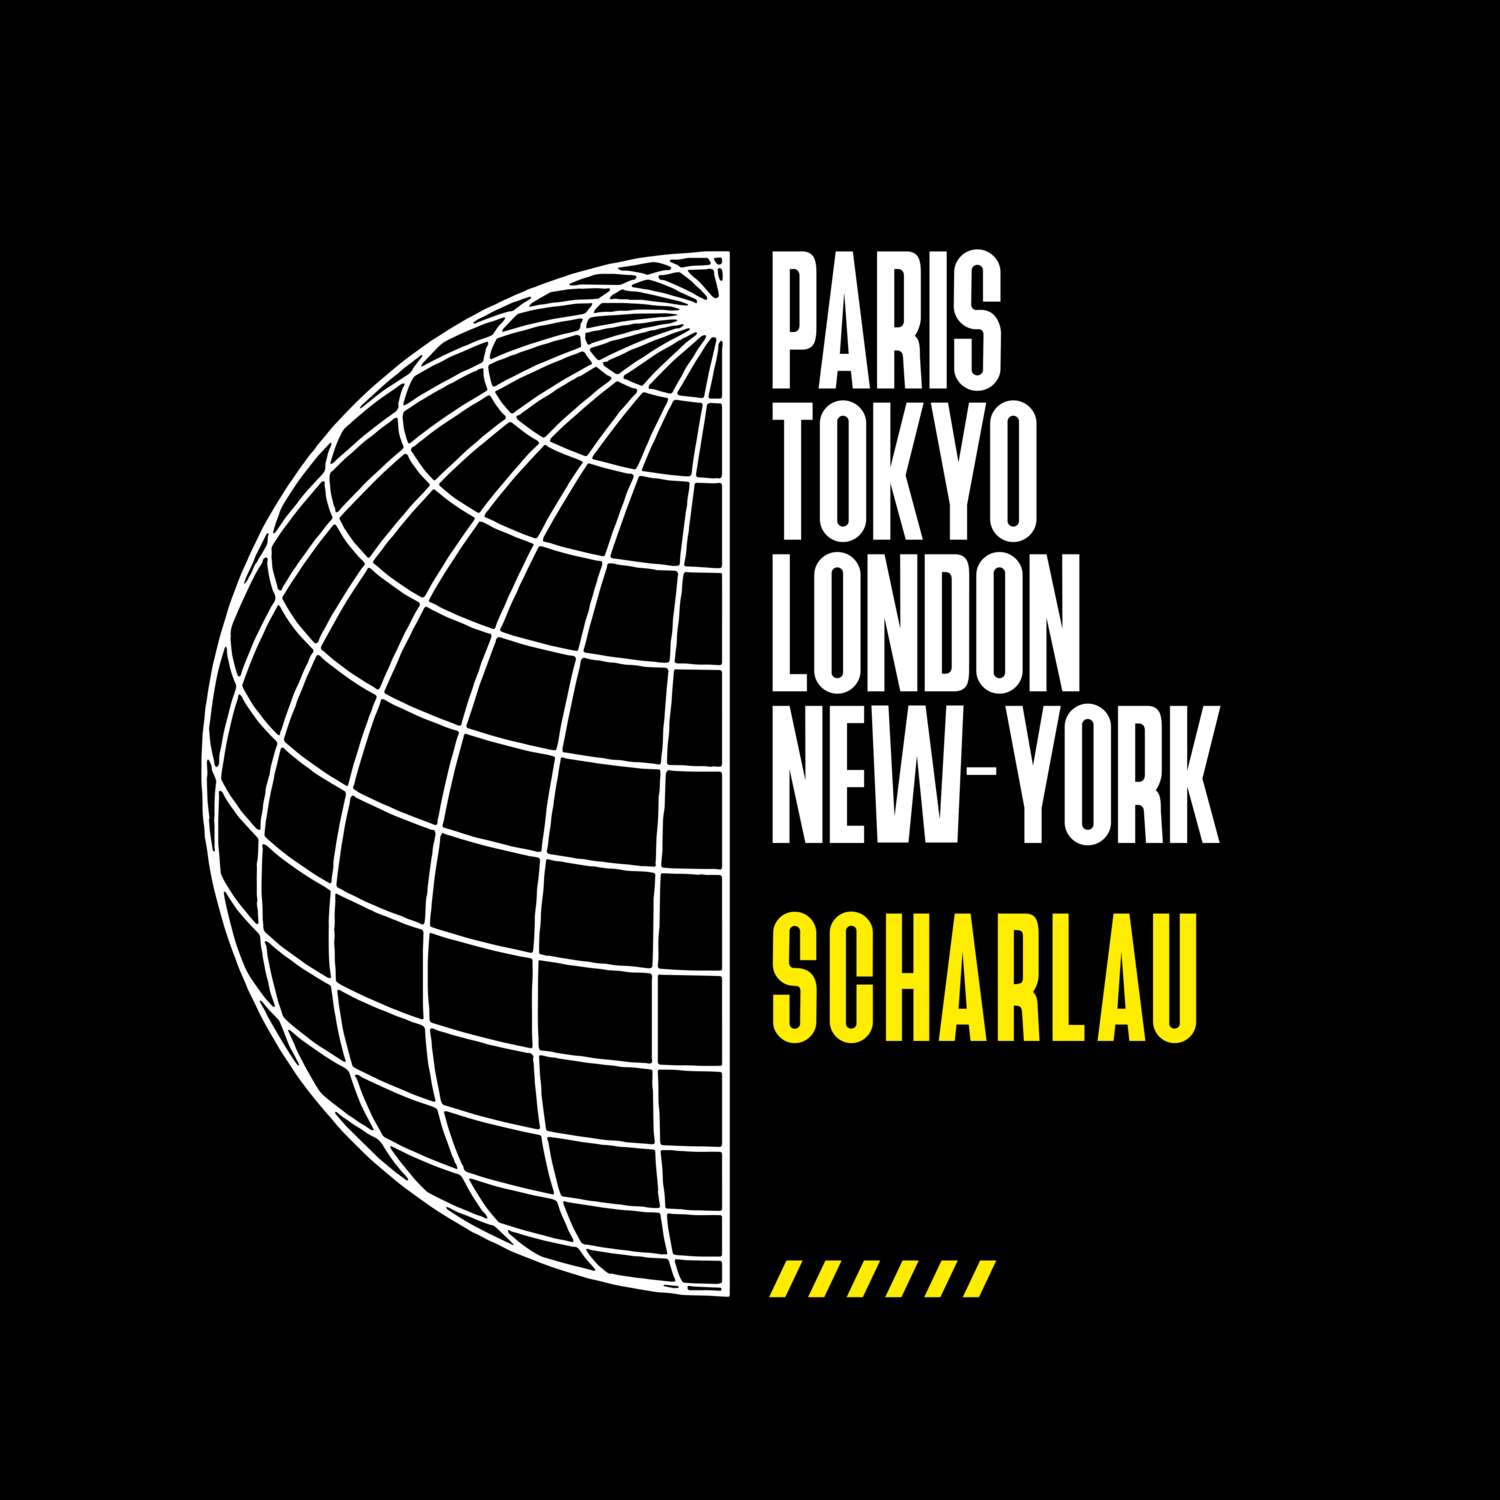 Scharlau T-Shirt »Paris Tokyo London«